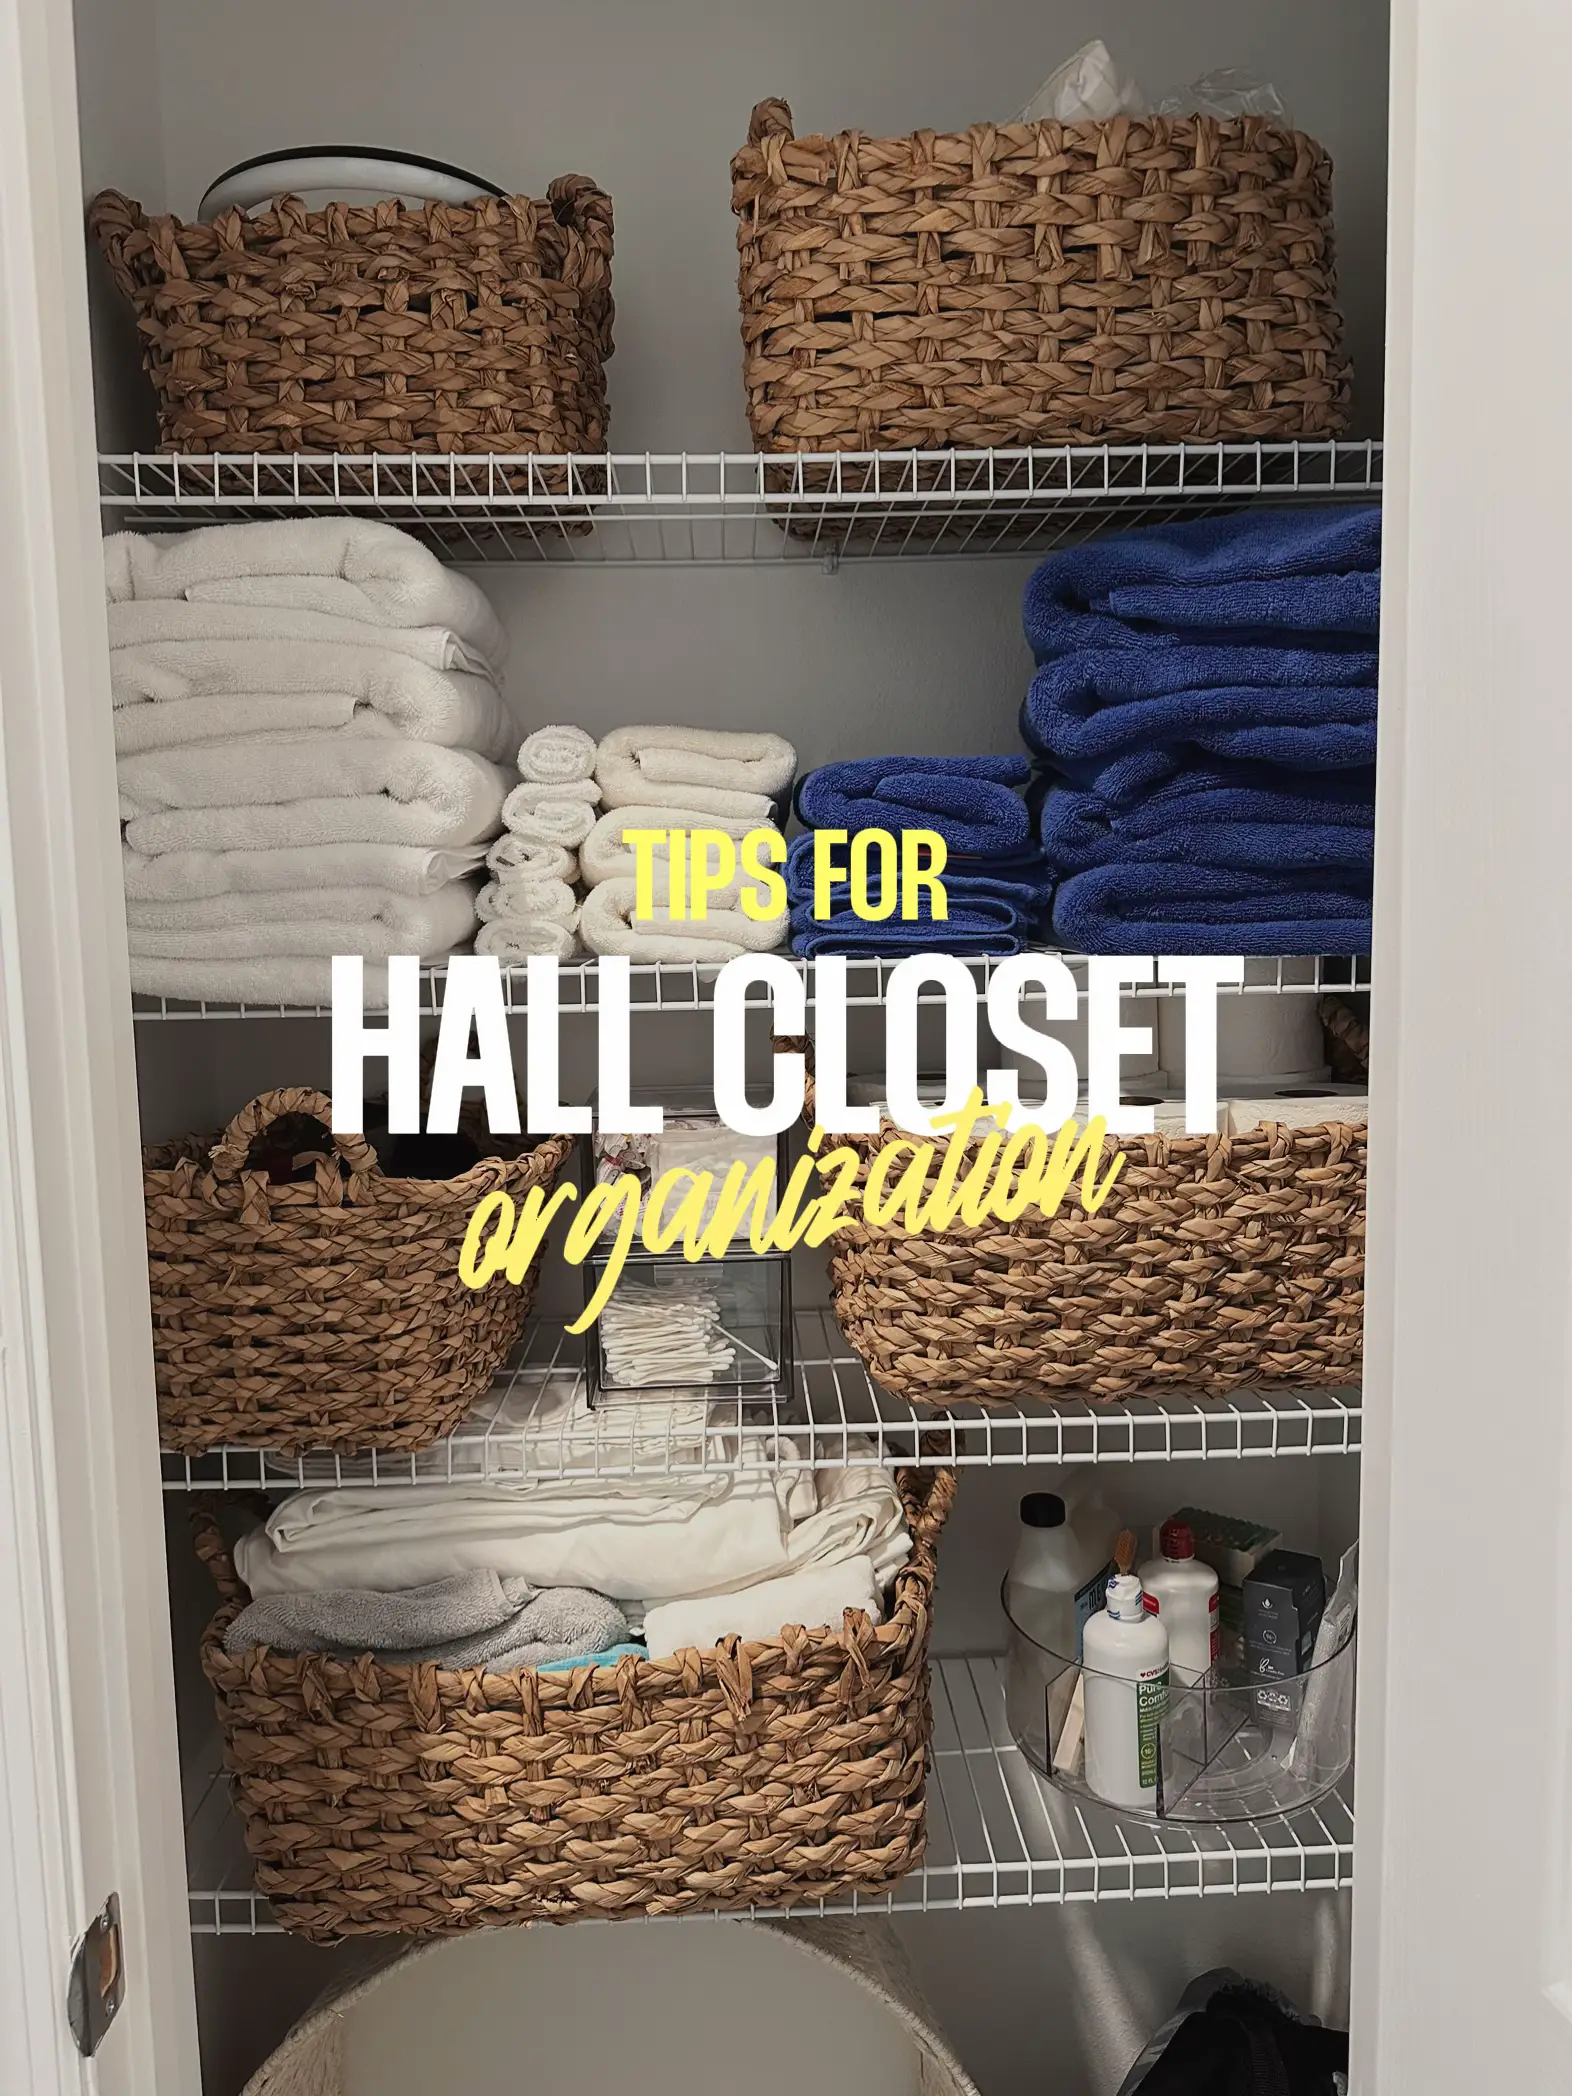 Hall Closet Organization Ideas